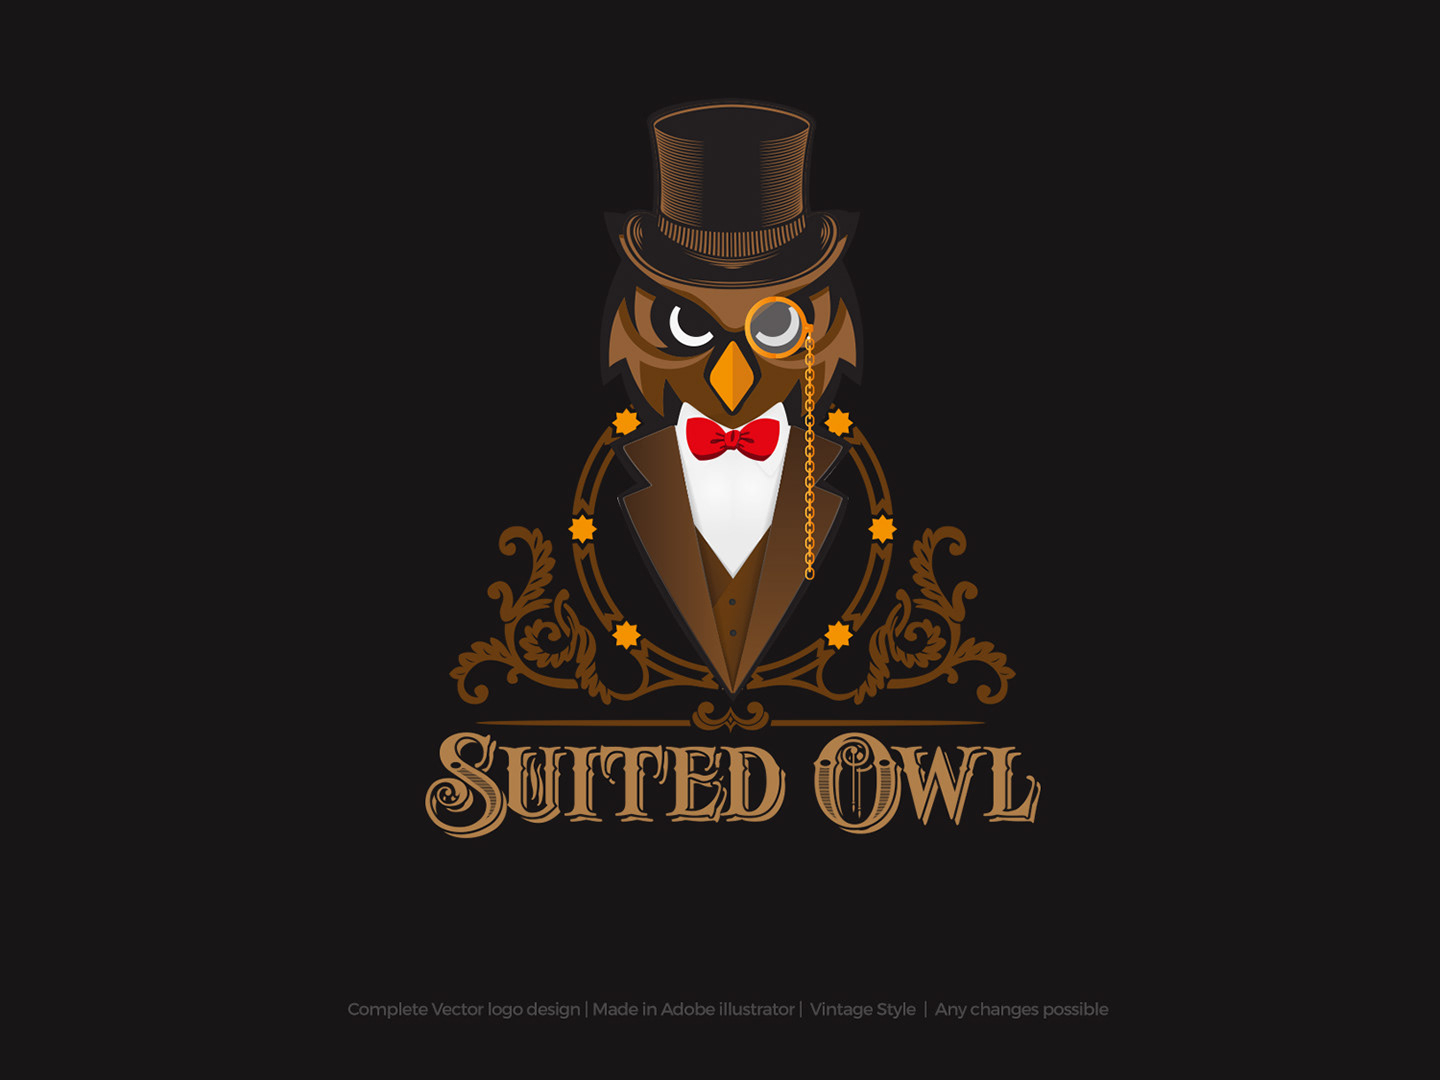 suited-owl-brand-logo-concept-by-shahinur-rashid-tuhin-on-dribbble